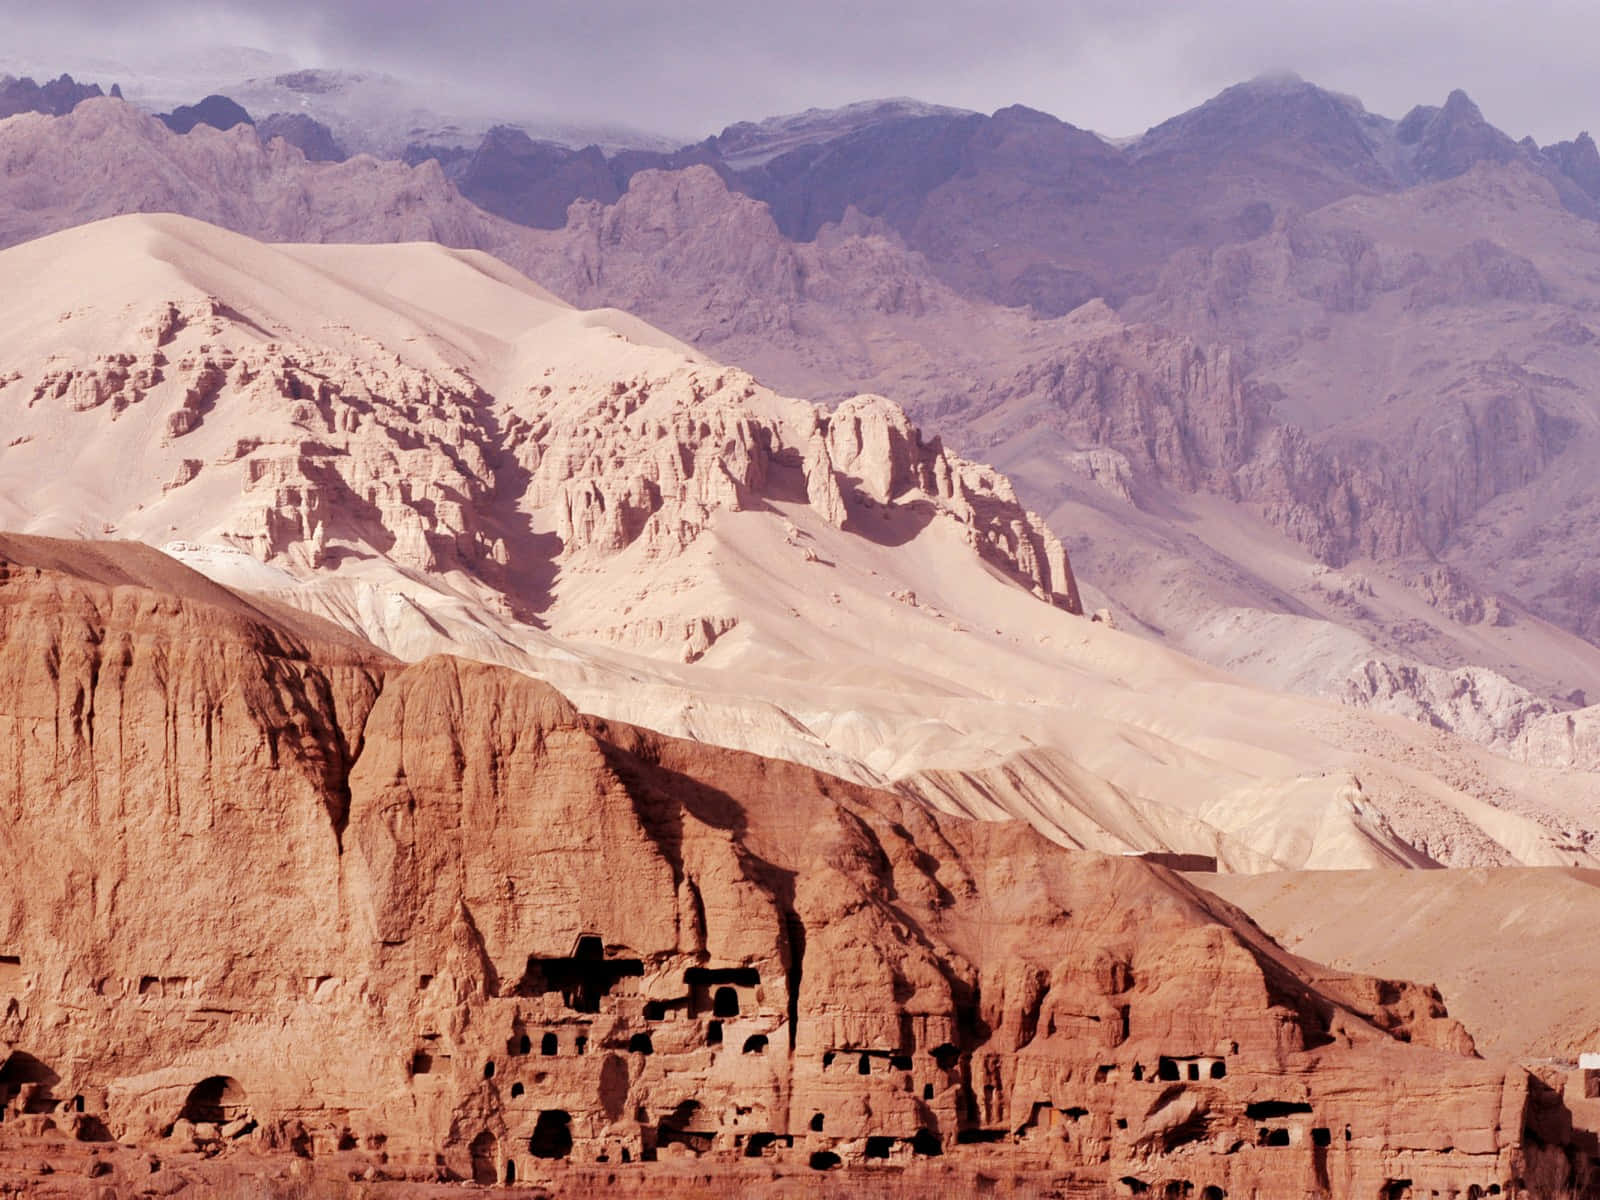 Hintergrundaus Afghanistan